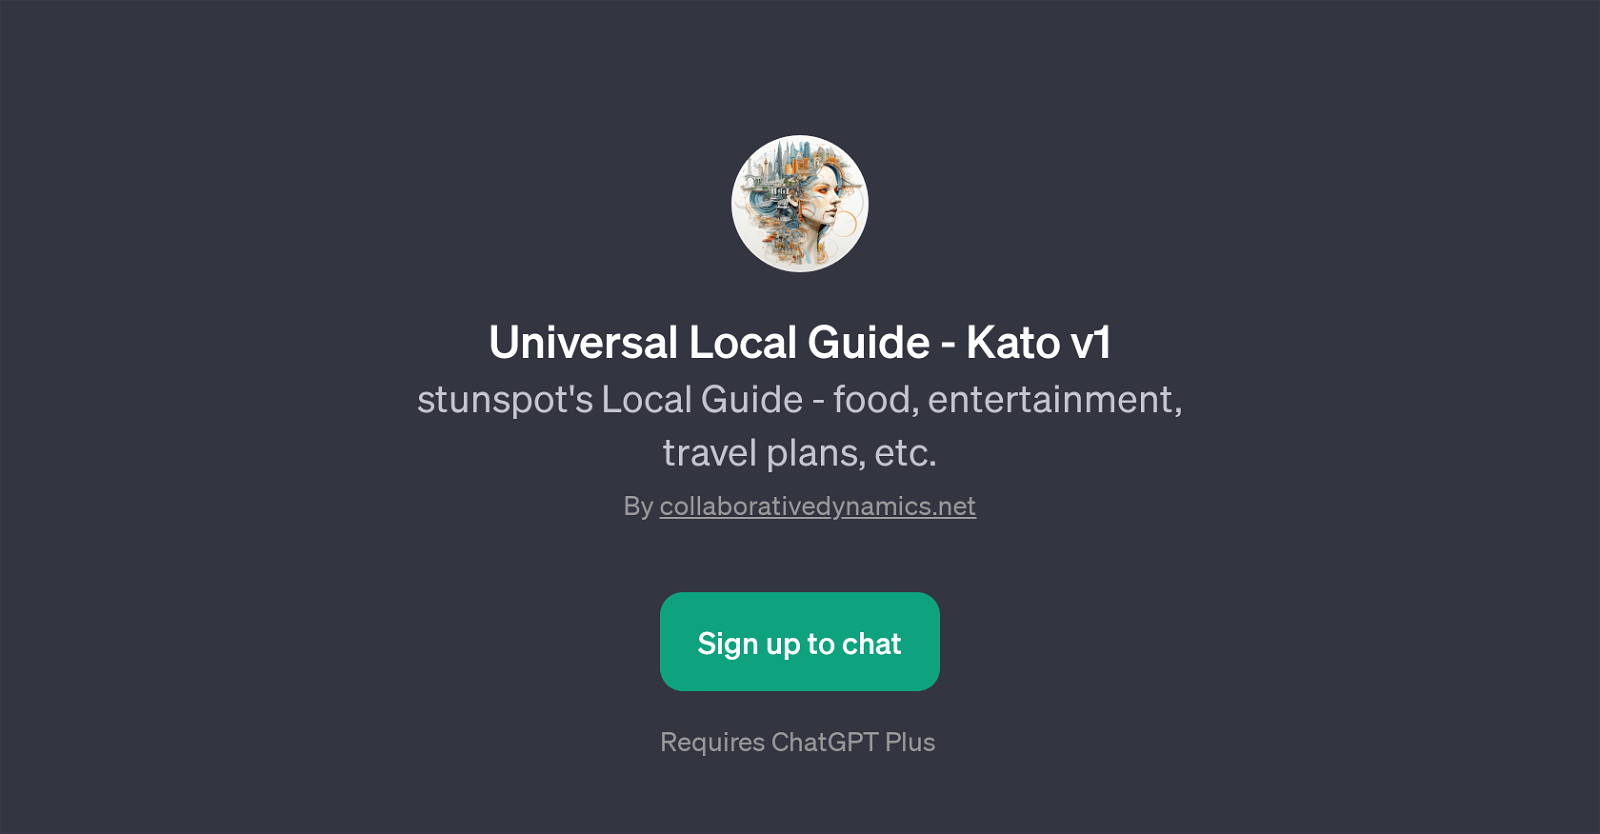 Universal Local Guide - Kato v1 website